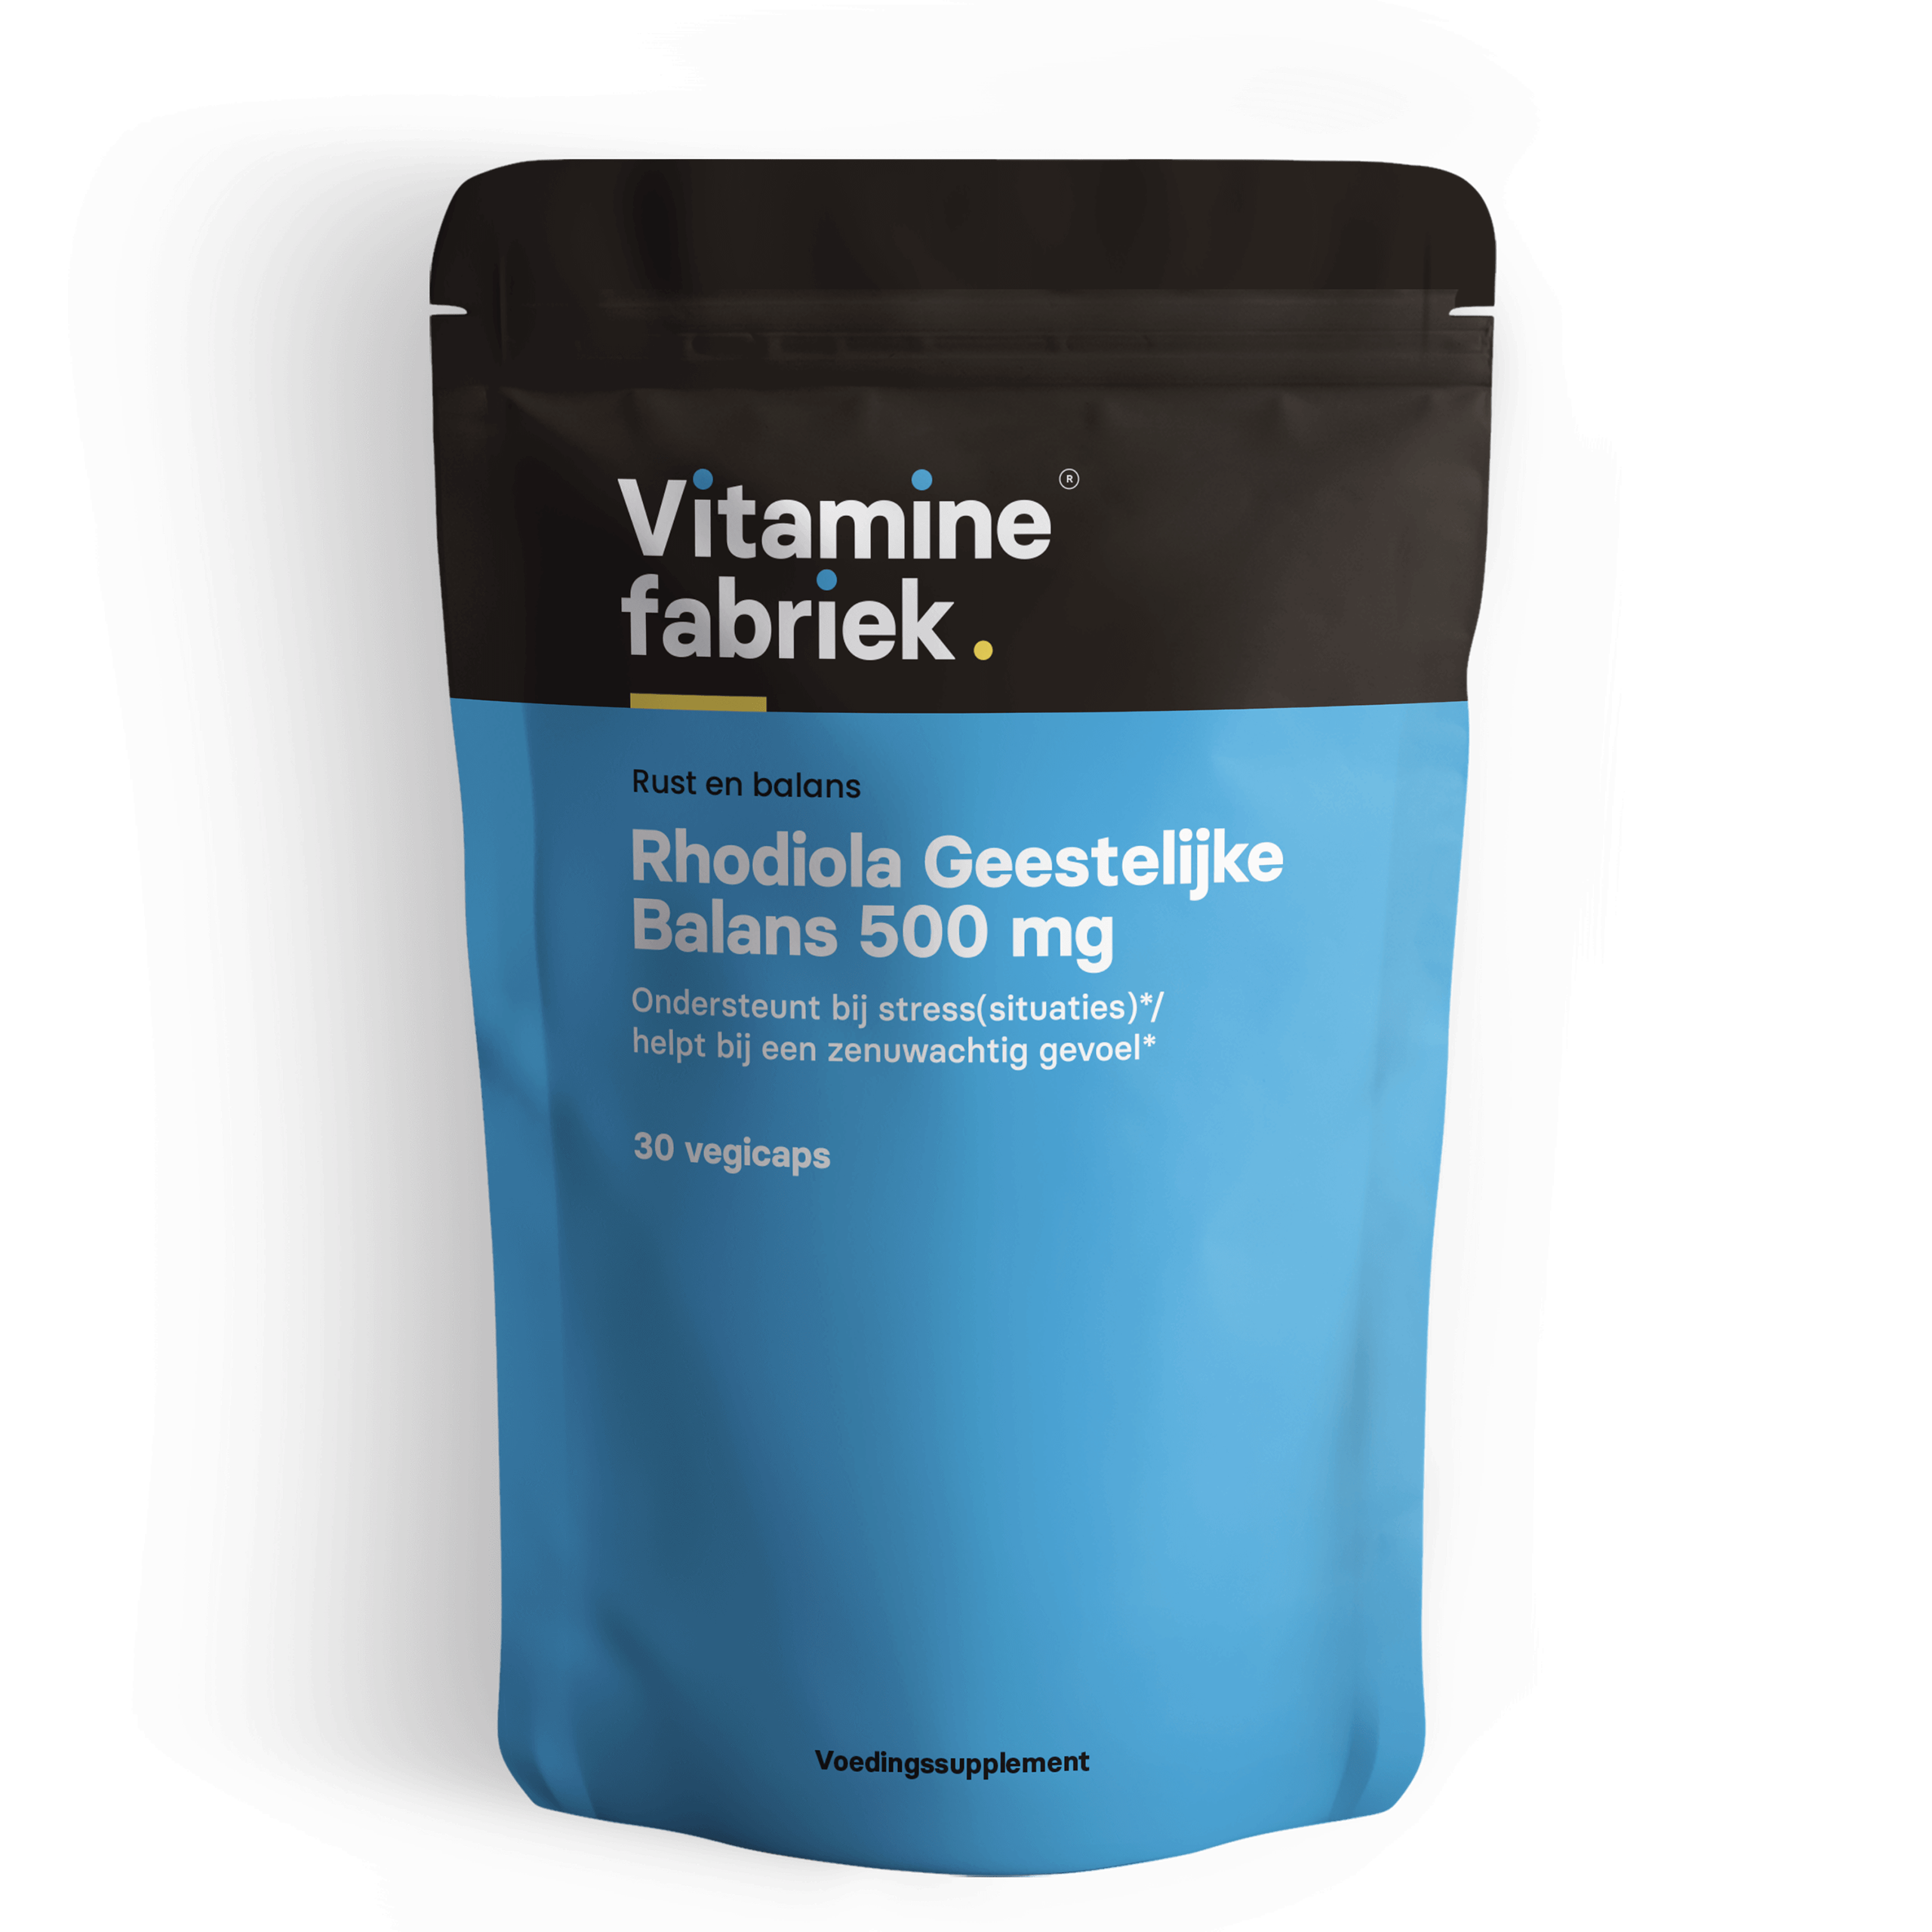 Rhodiola Geestelijke Balans 500 mg - 30 vegicaps - Vitaminefabriek.nl